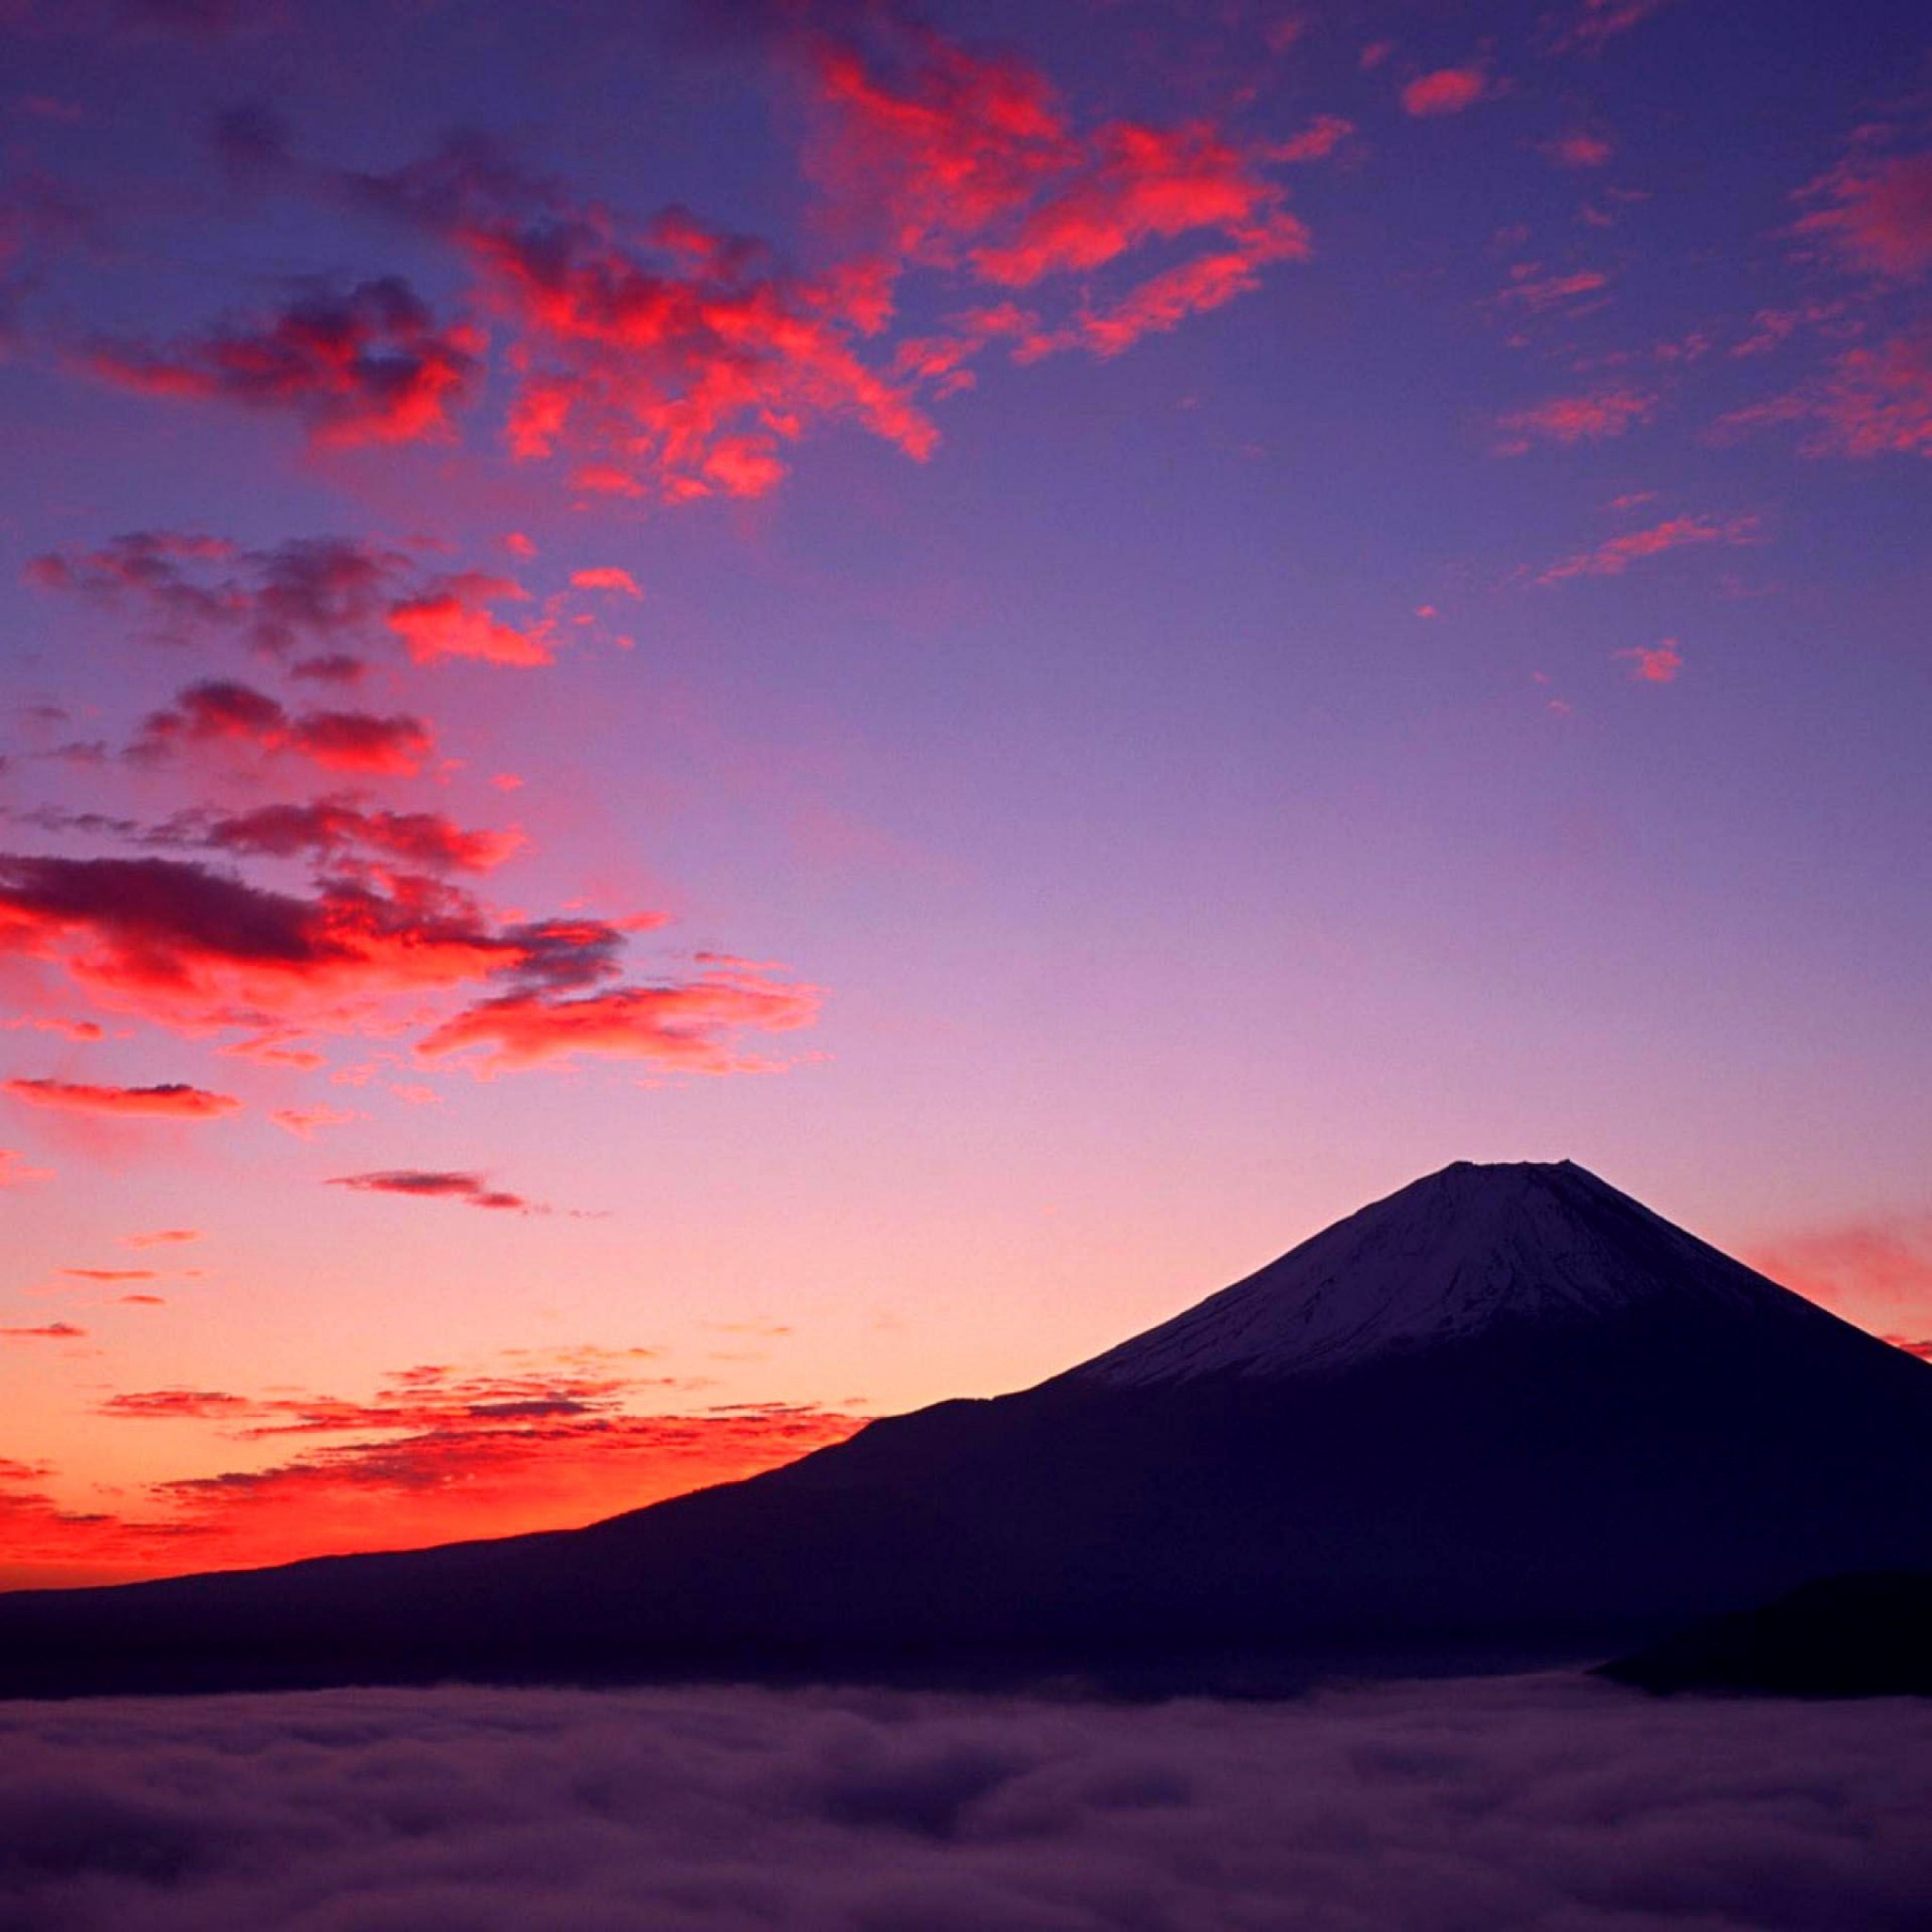 Hd限定高 画質 富士山 スマホ 壁紙 すべての美しい花の画像